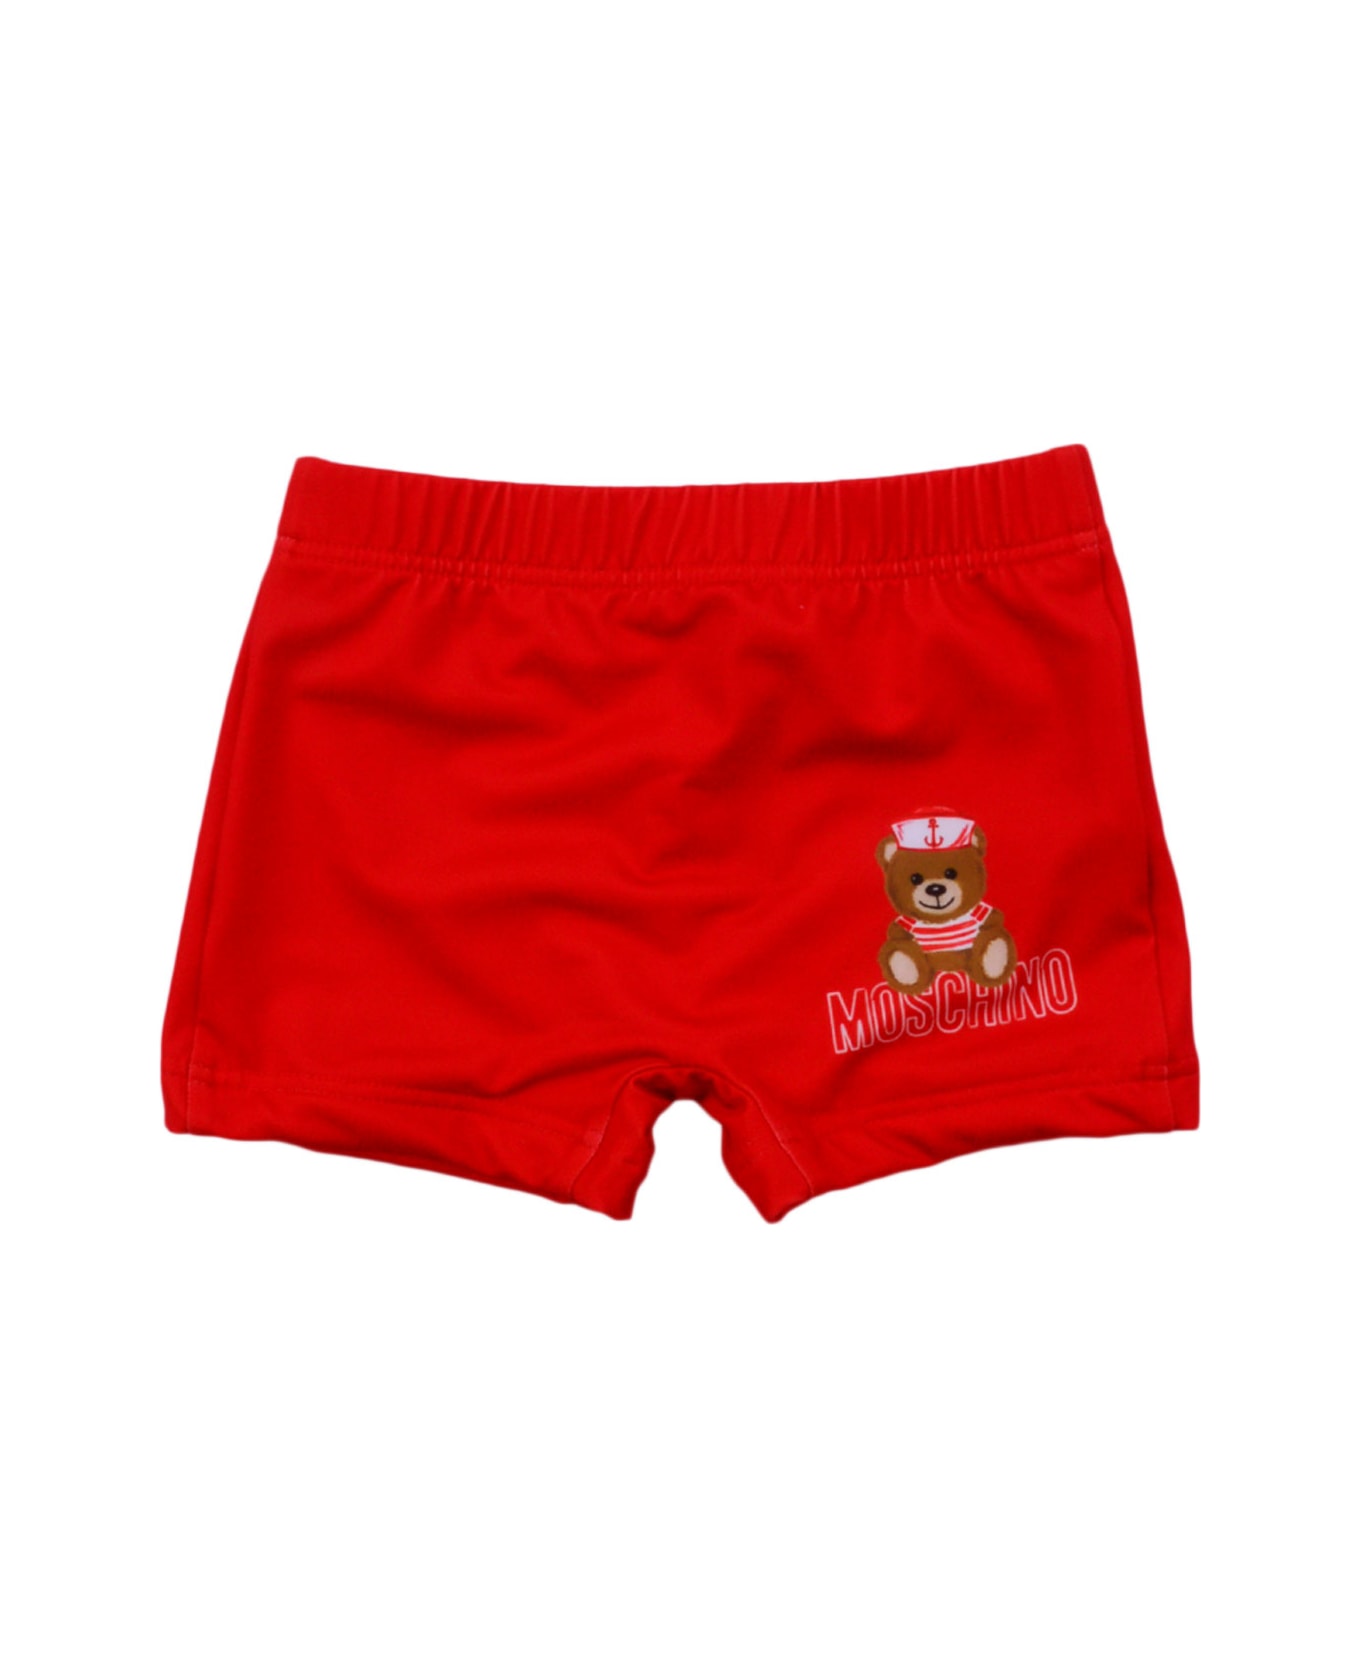 Moschino Printed Beach Shorts - Red 水着